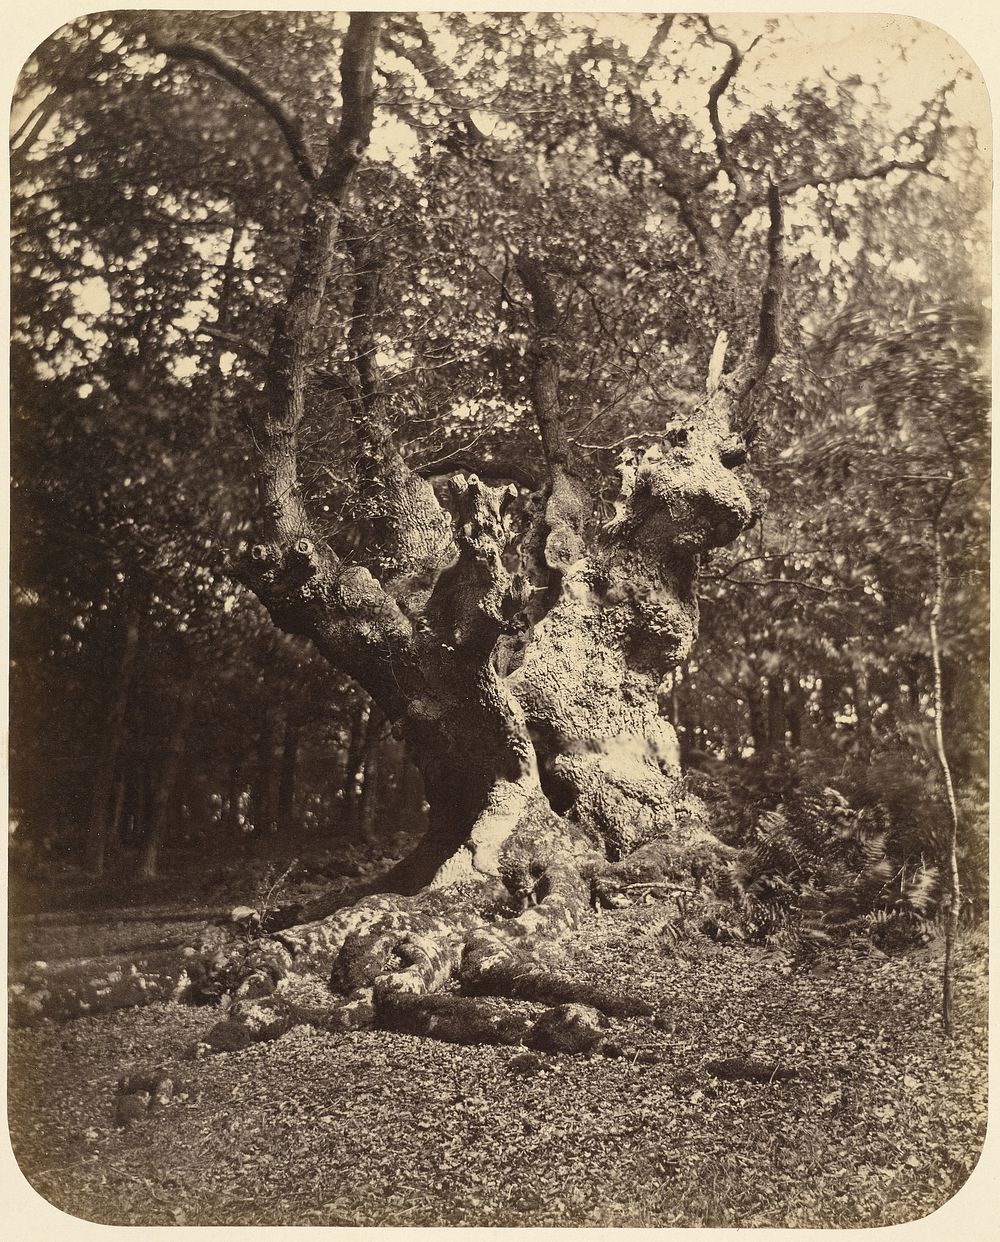 Gnarled Tree by Gertrude Elizabeth Rogers